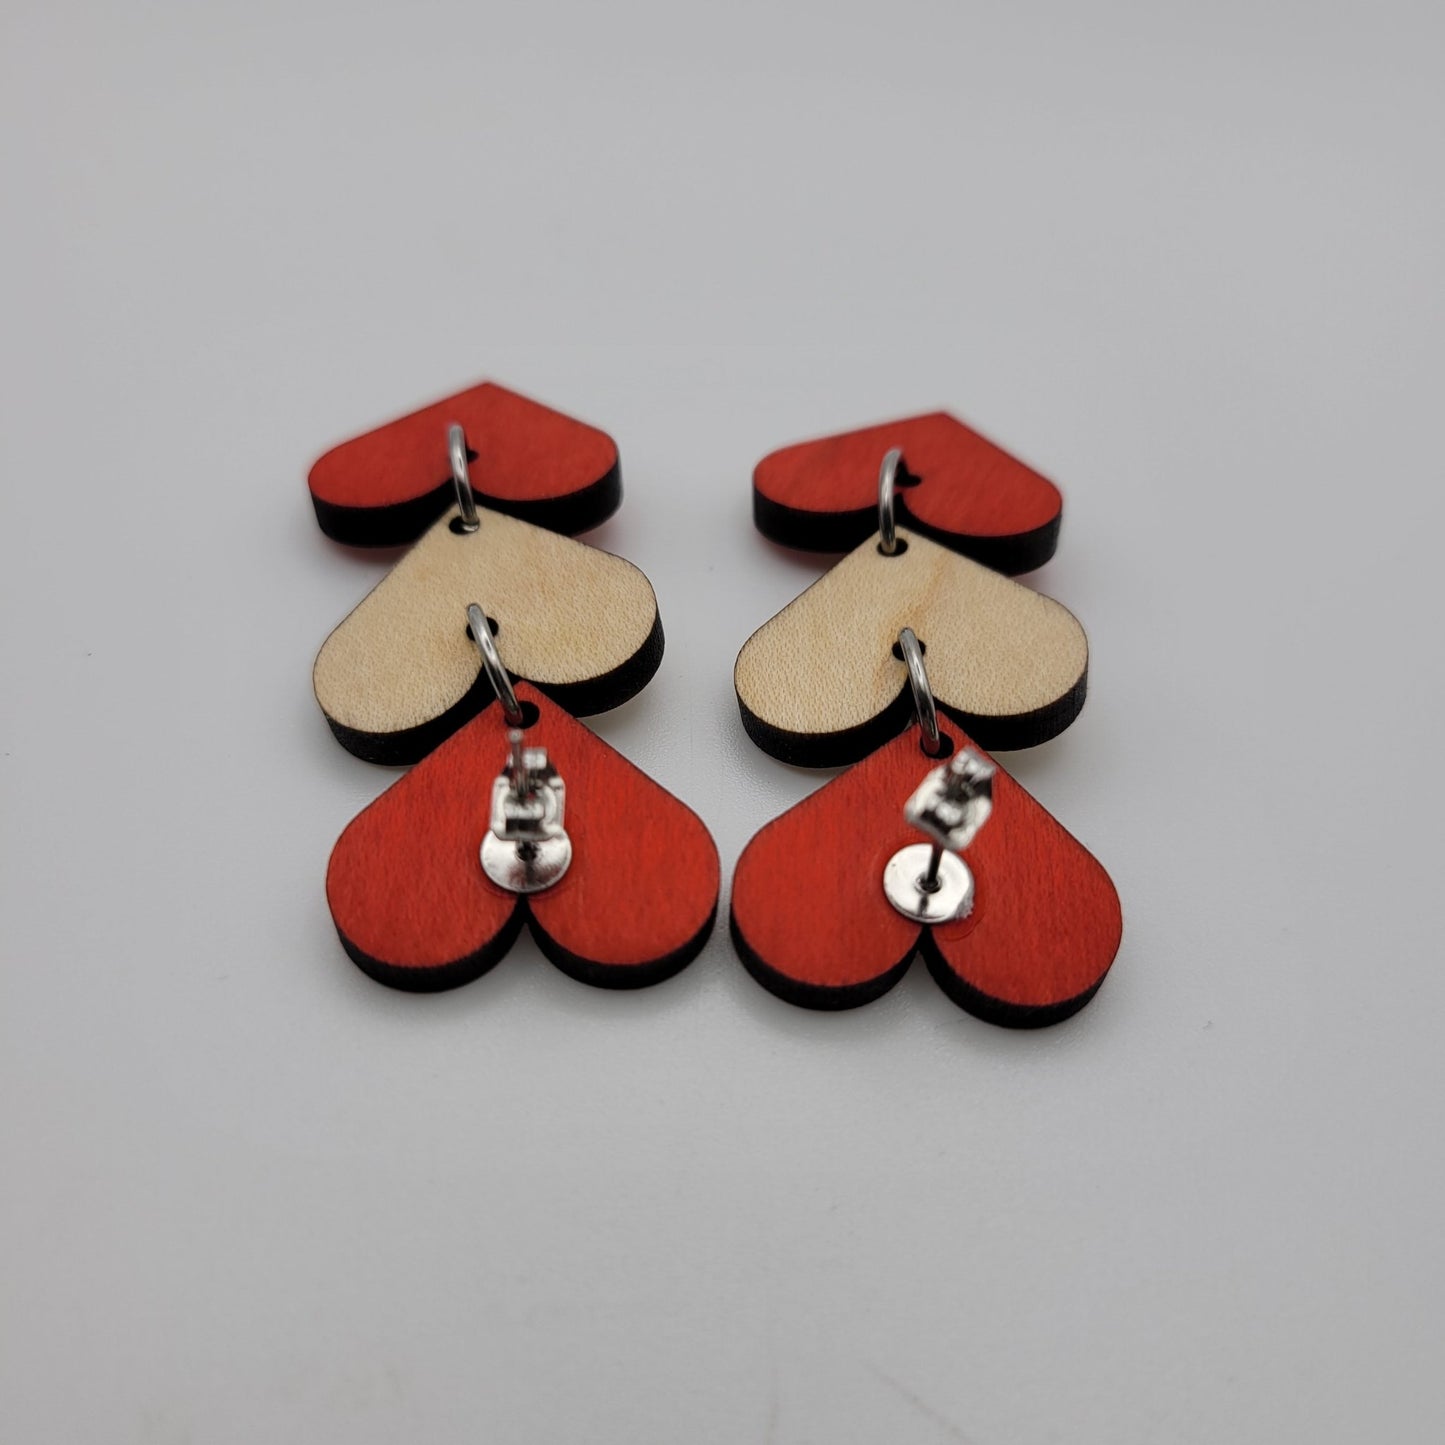 Hand Painted Wood Heart Dangle Earrings - 4 Arrows Creations